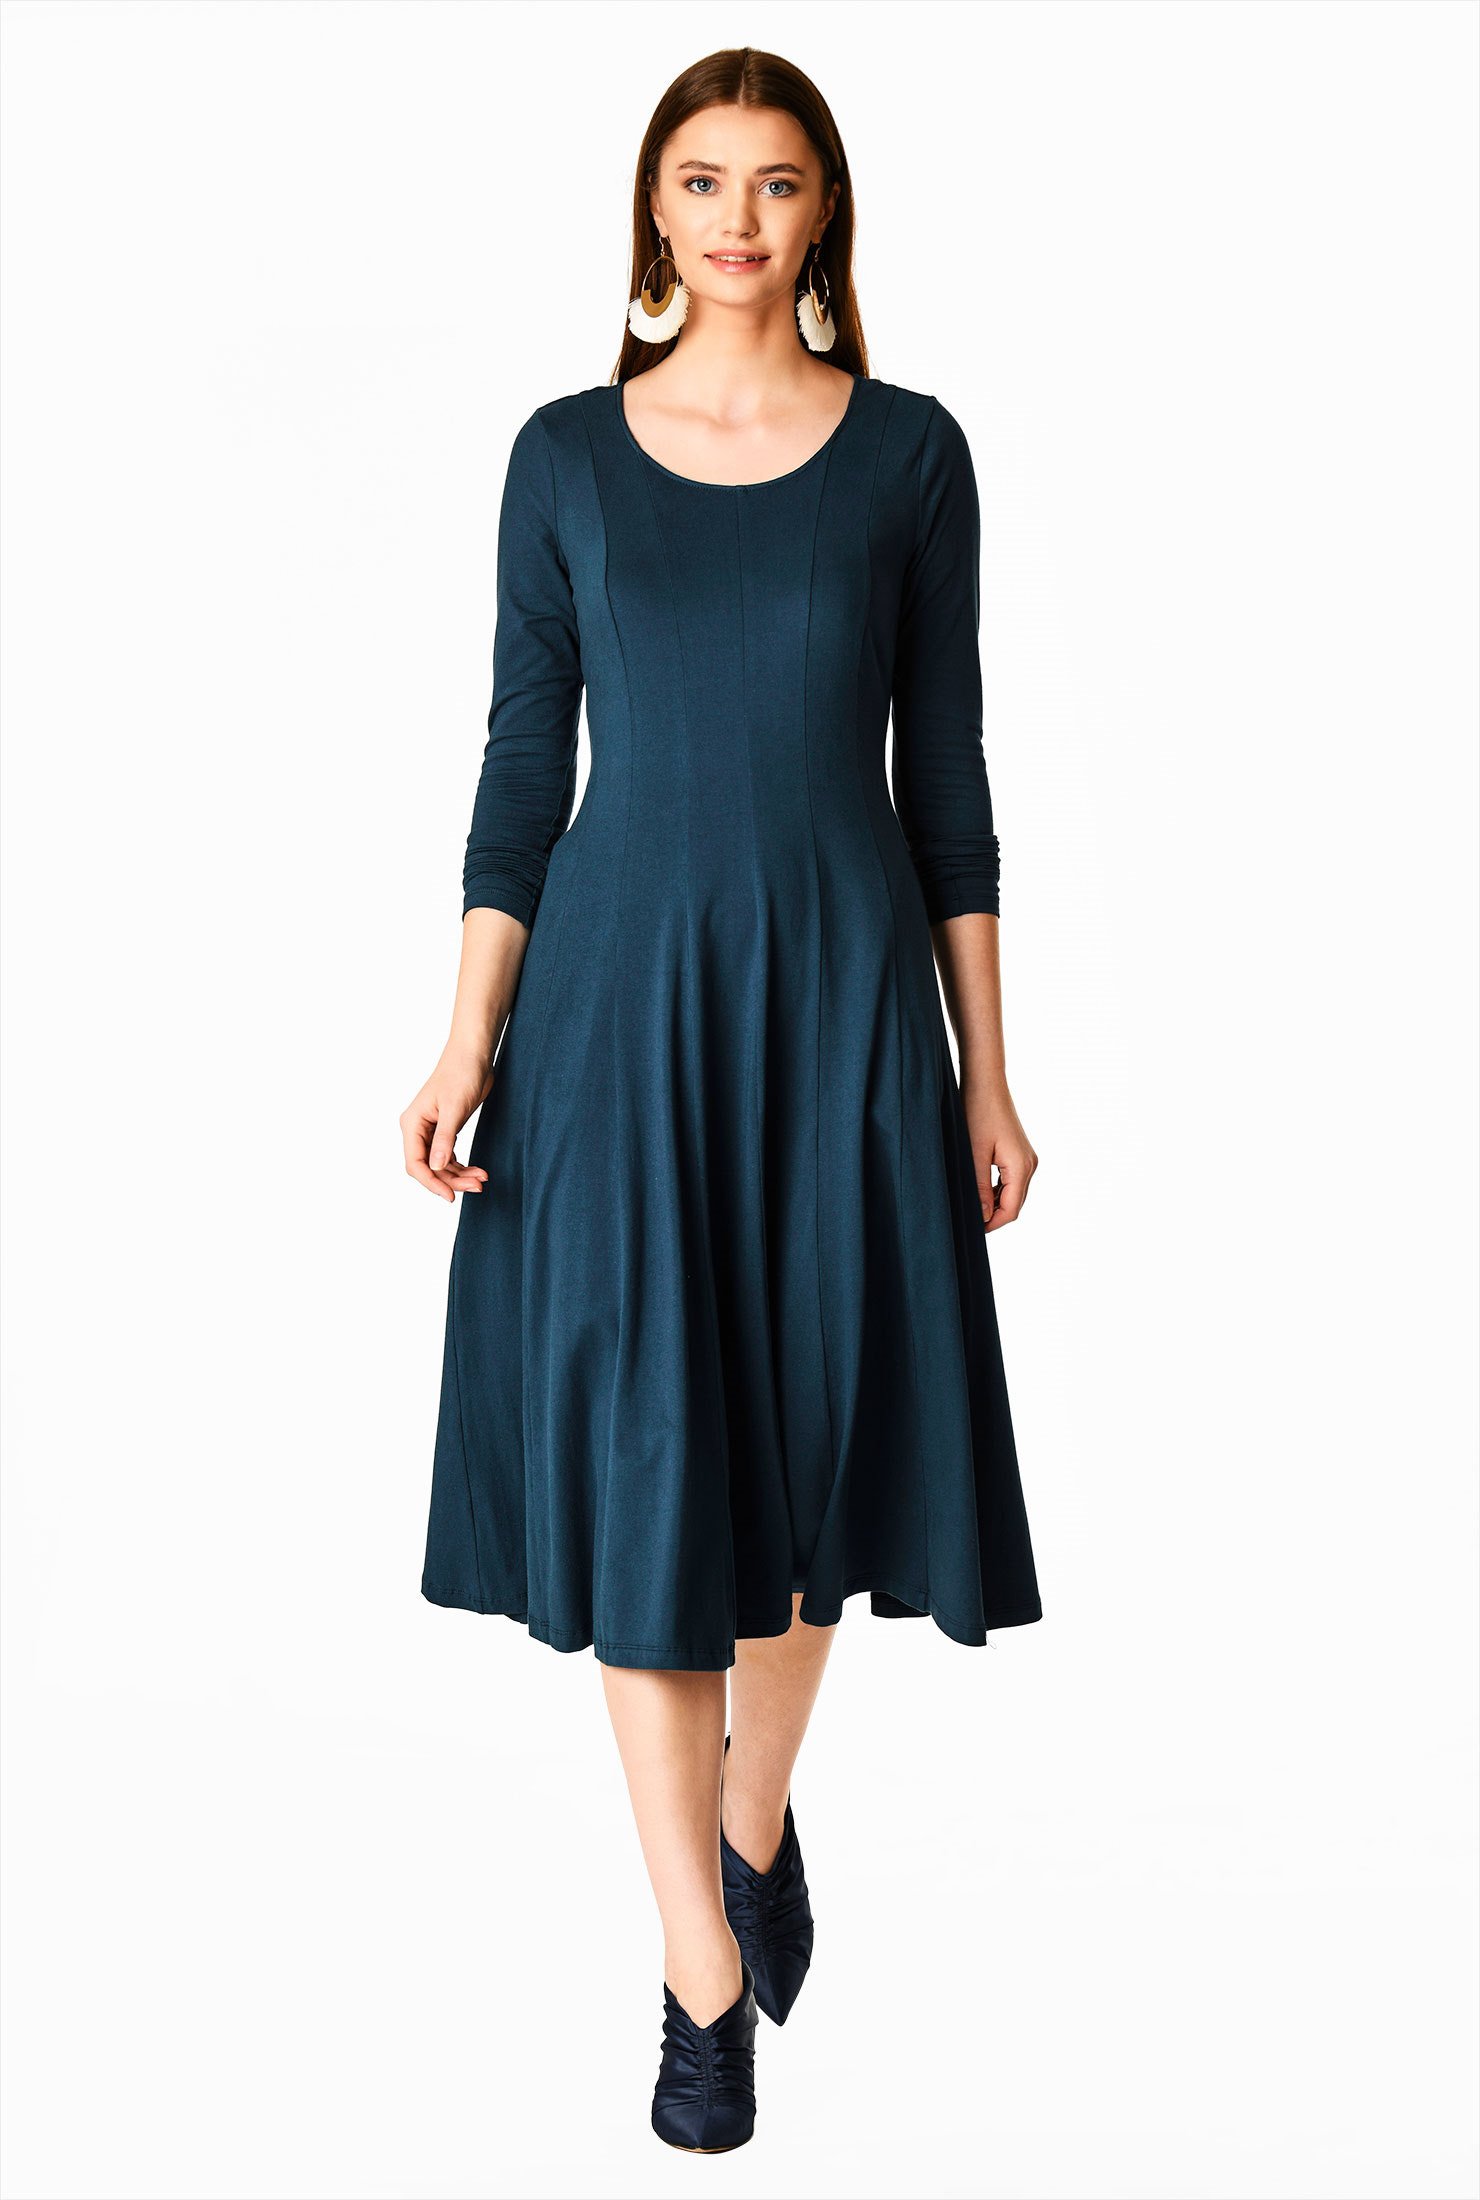 Shop Fit-and-flare cotton knit dress | eShakti